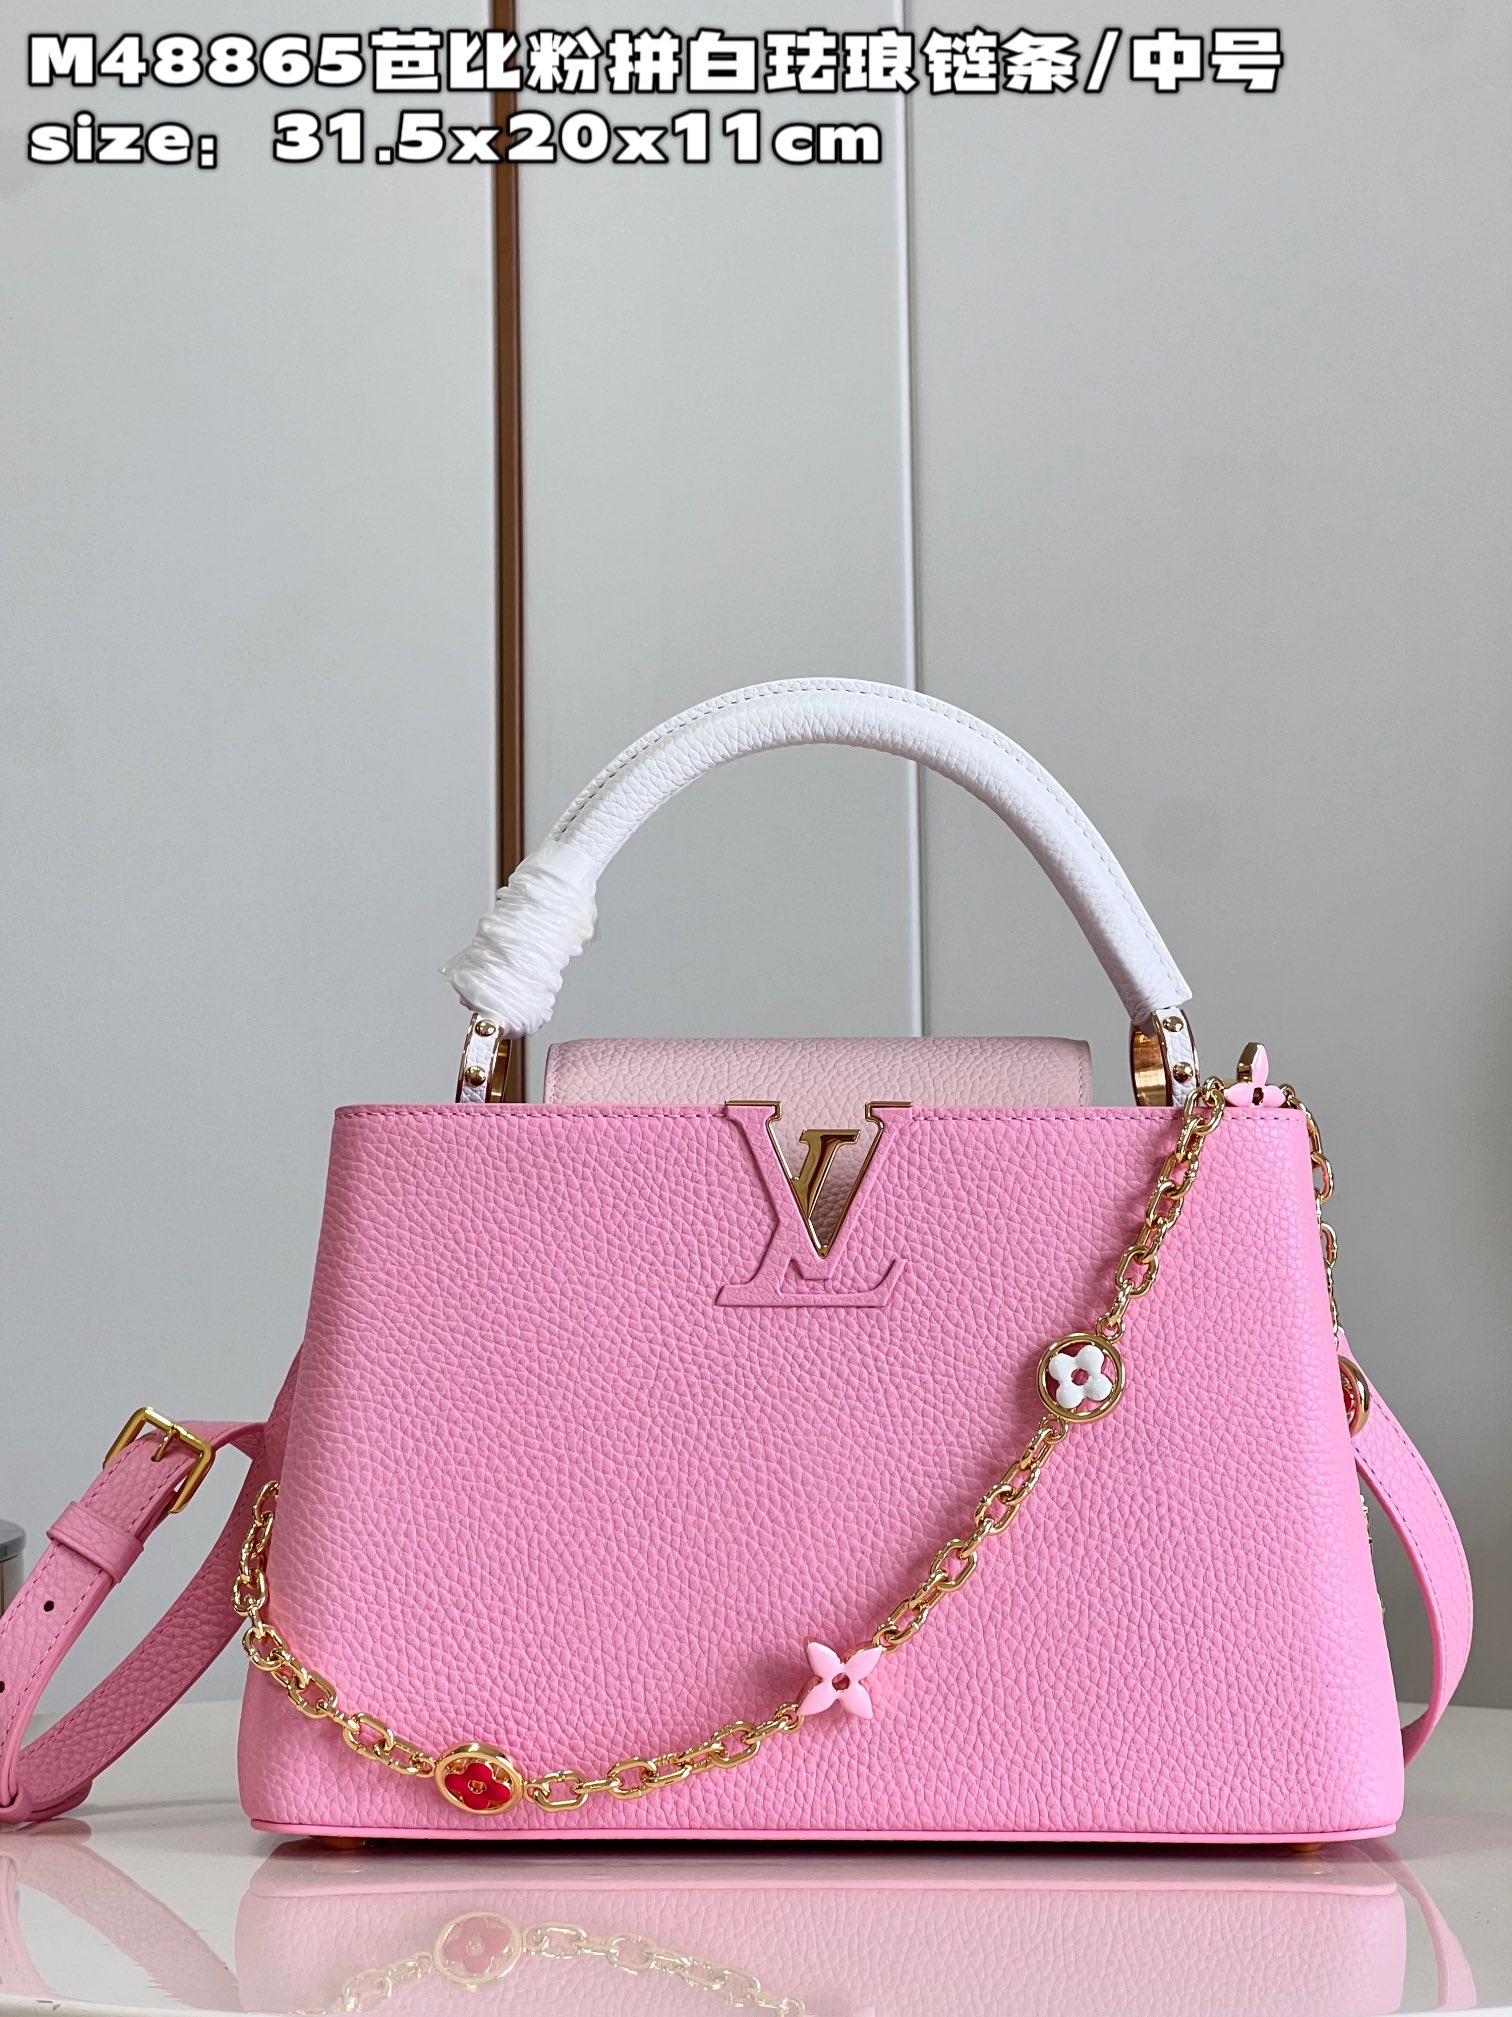 Louis Vuitton LV Capucines Bags Handbags Pink White Polishing Chains M48865